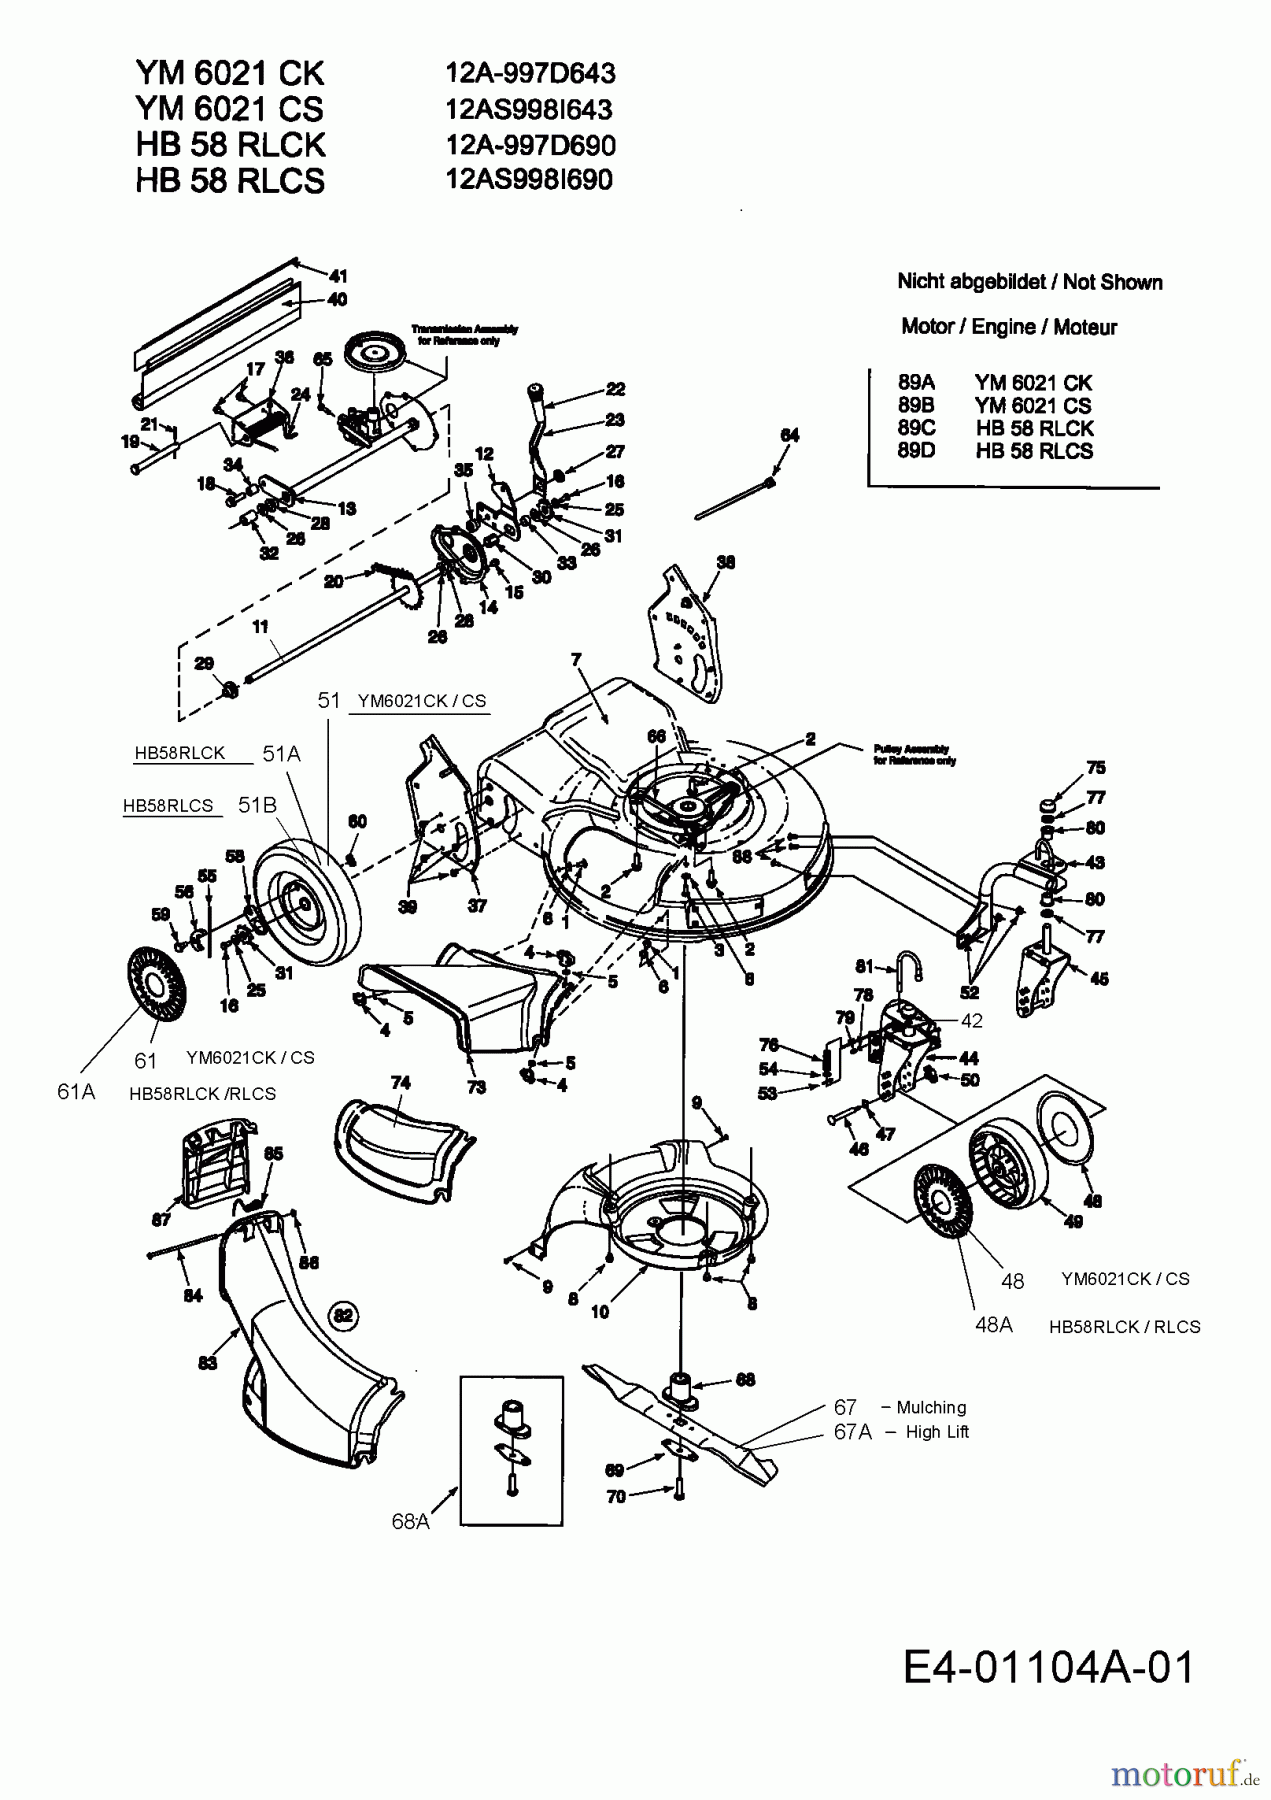  Gutbrod Petrol mower self propelled HB 58 RLCK 12A-997D690  (2003) Basic machine